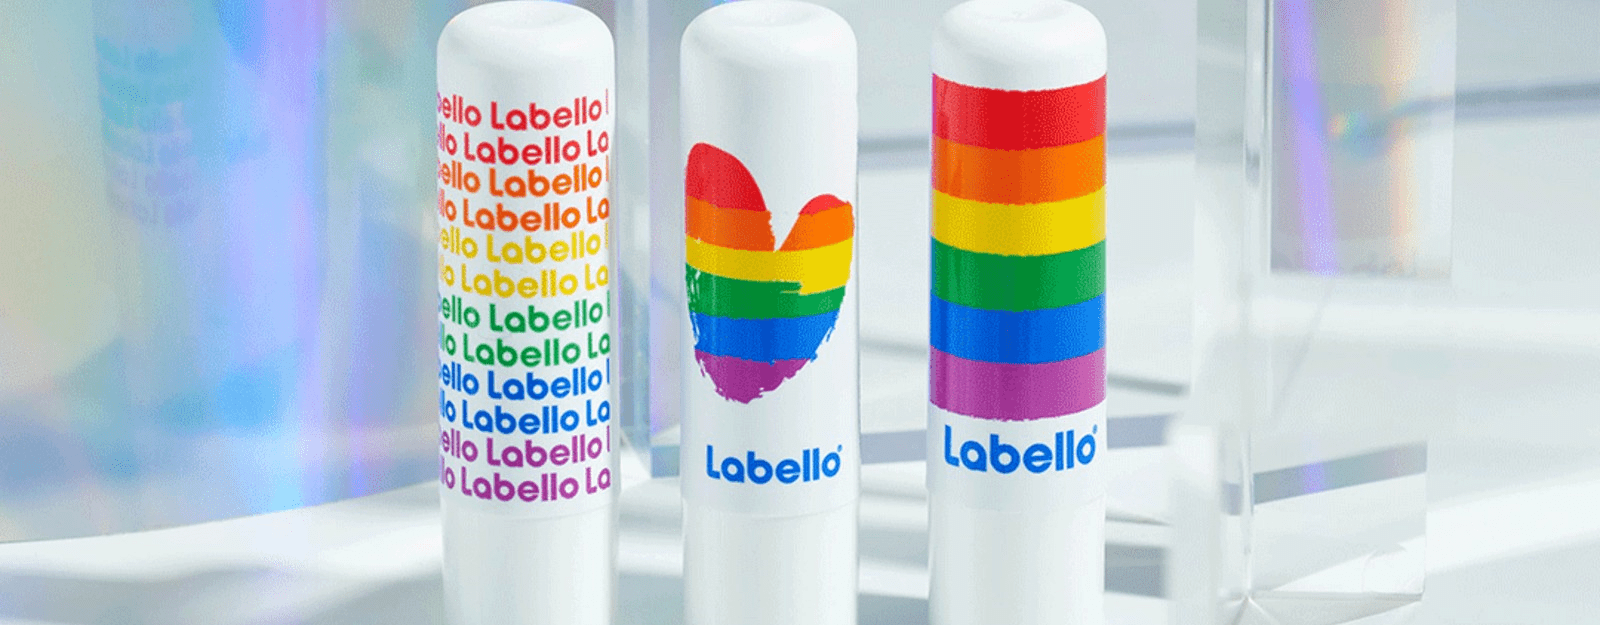 batons Labello personalizados pride